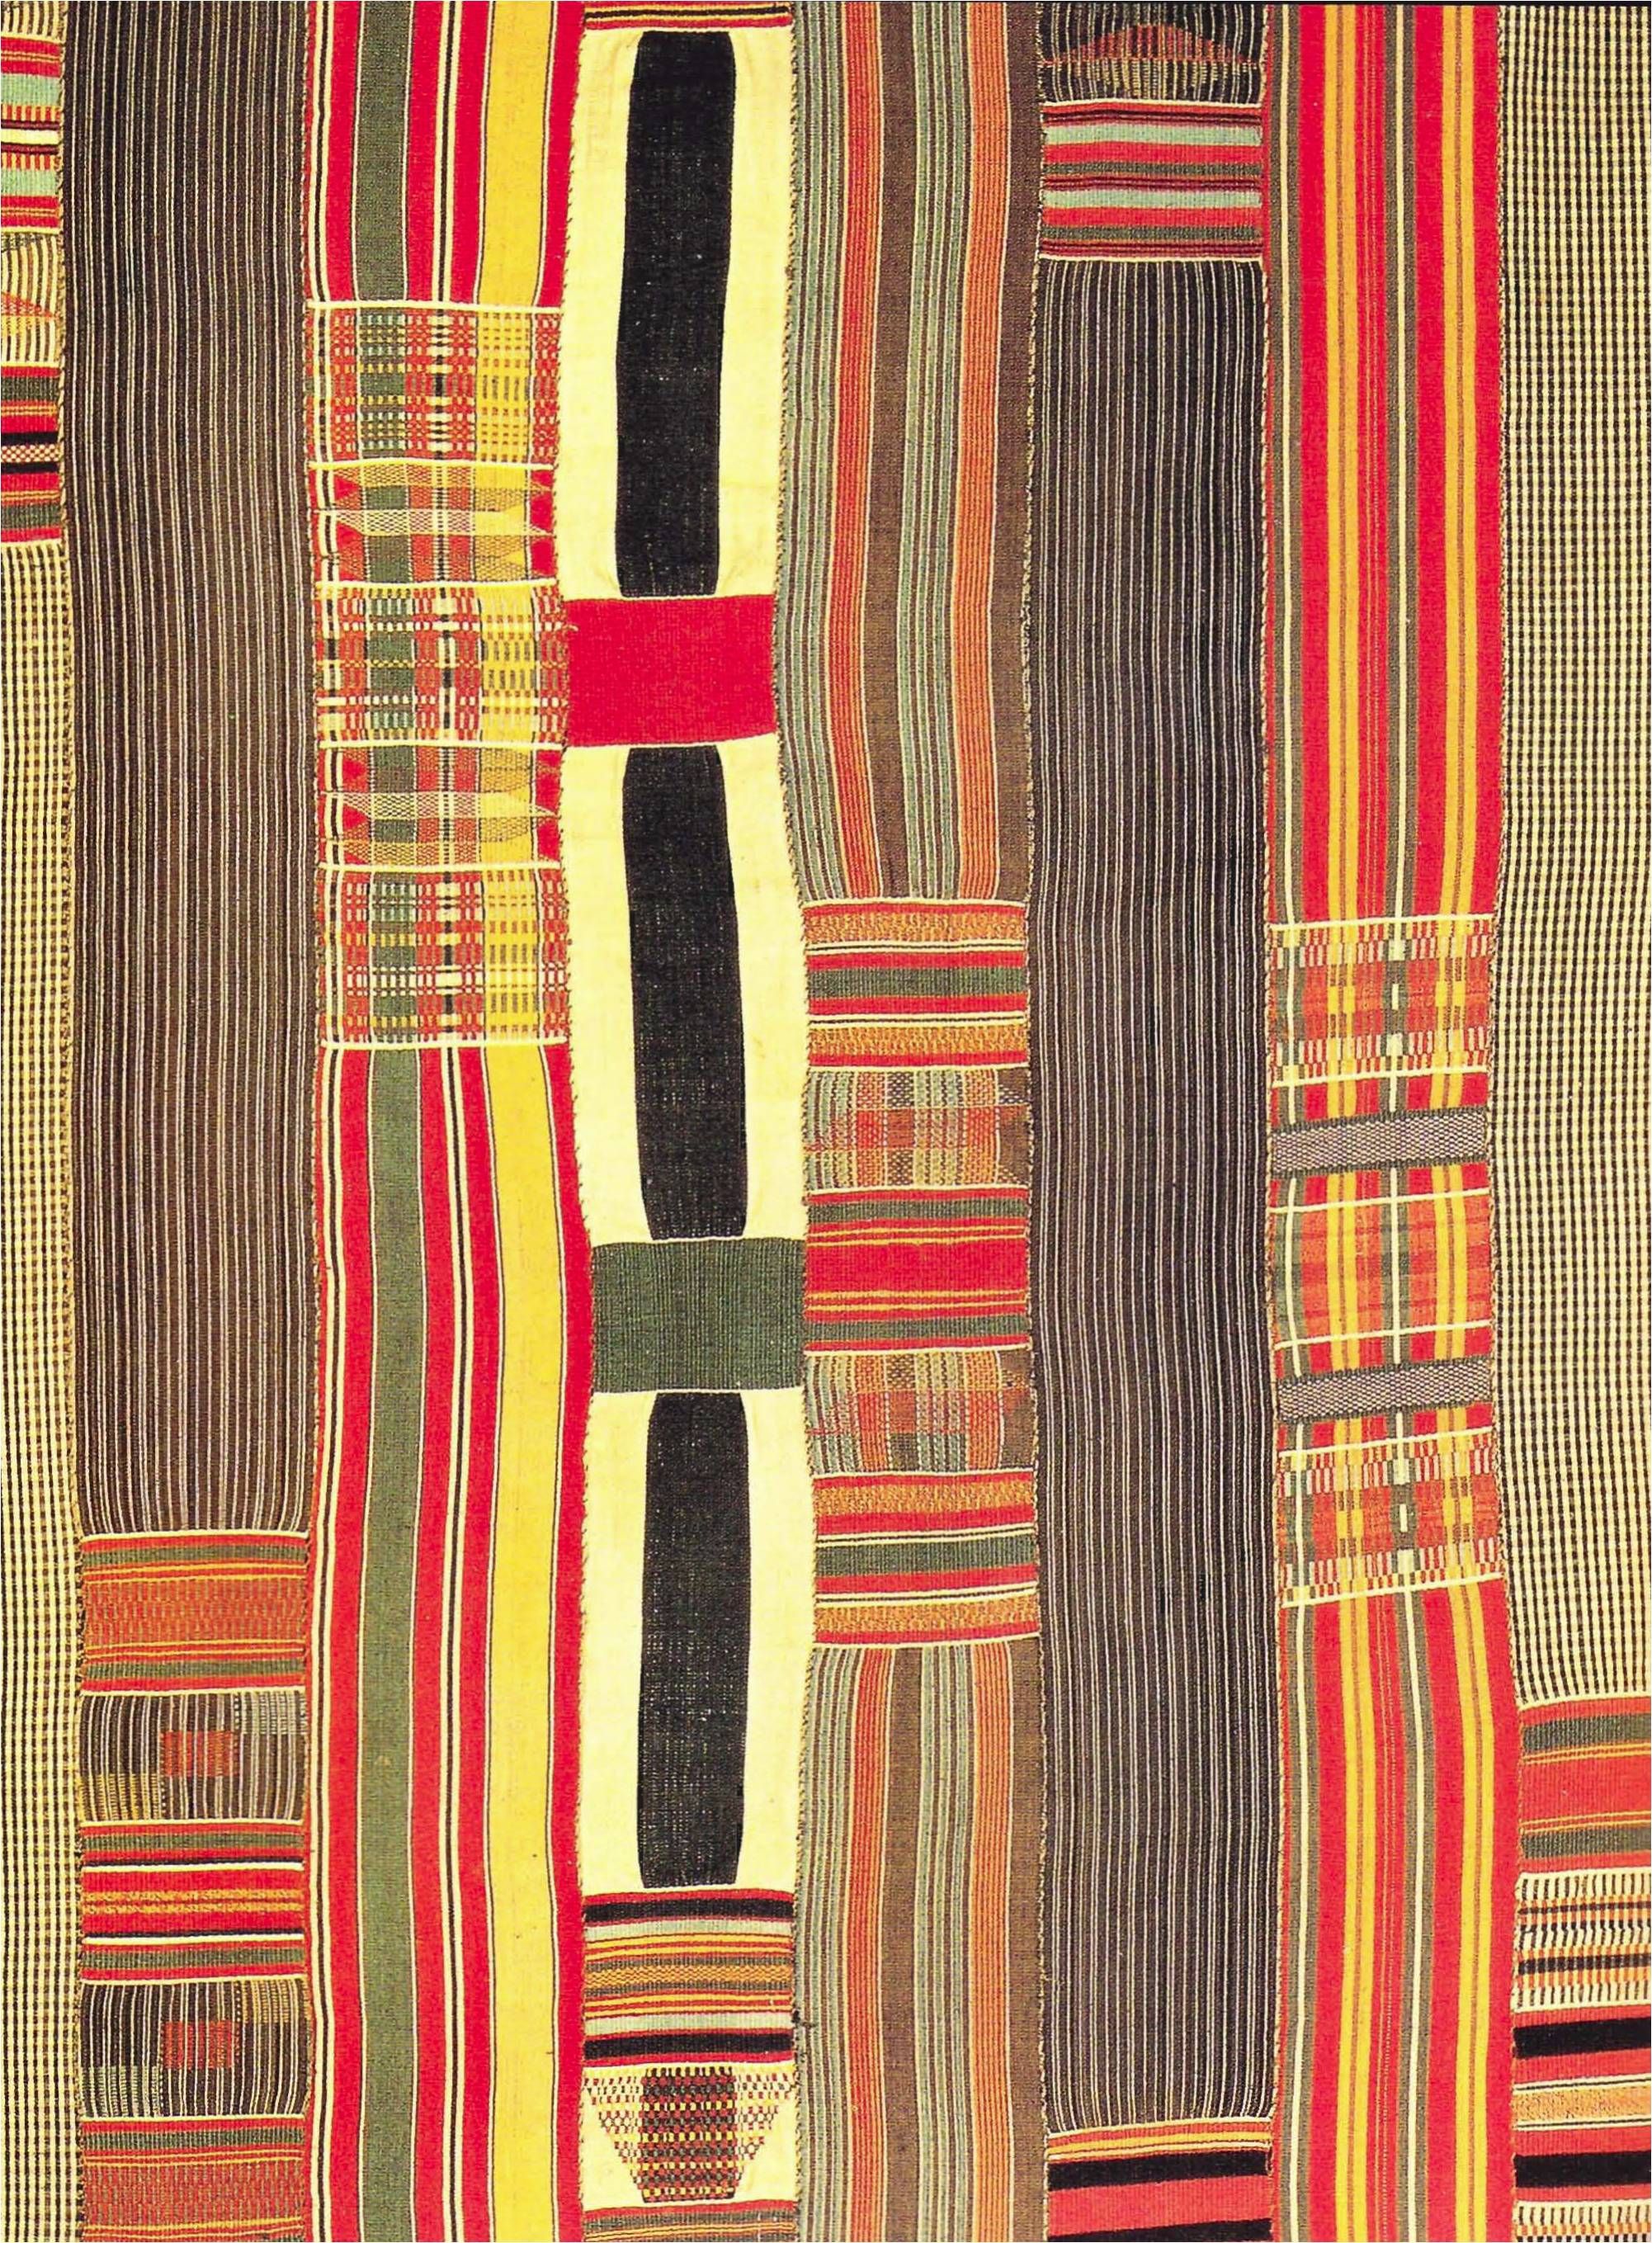 fabric weaved in Ghana - 1930's | Africa and world art | Pinterest ...